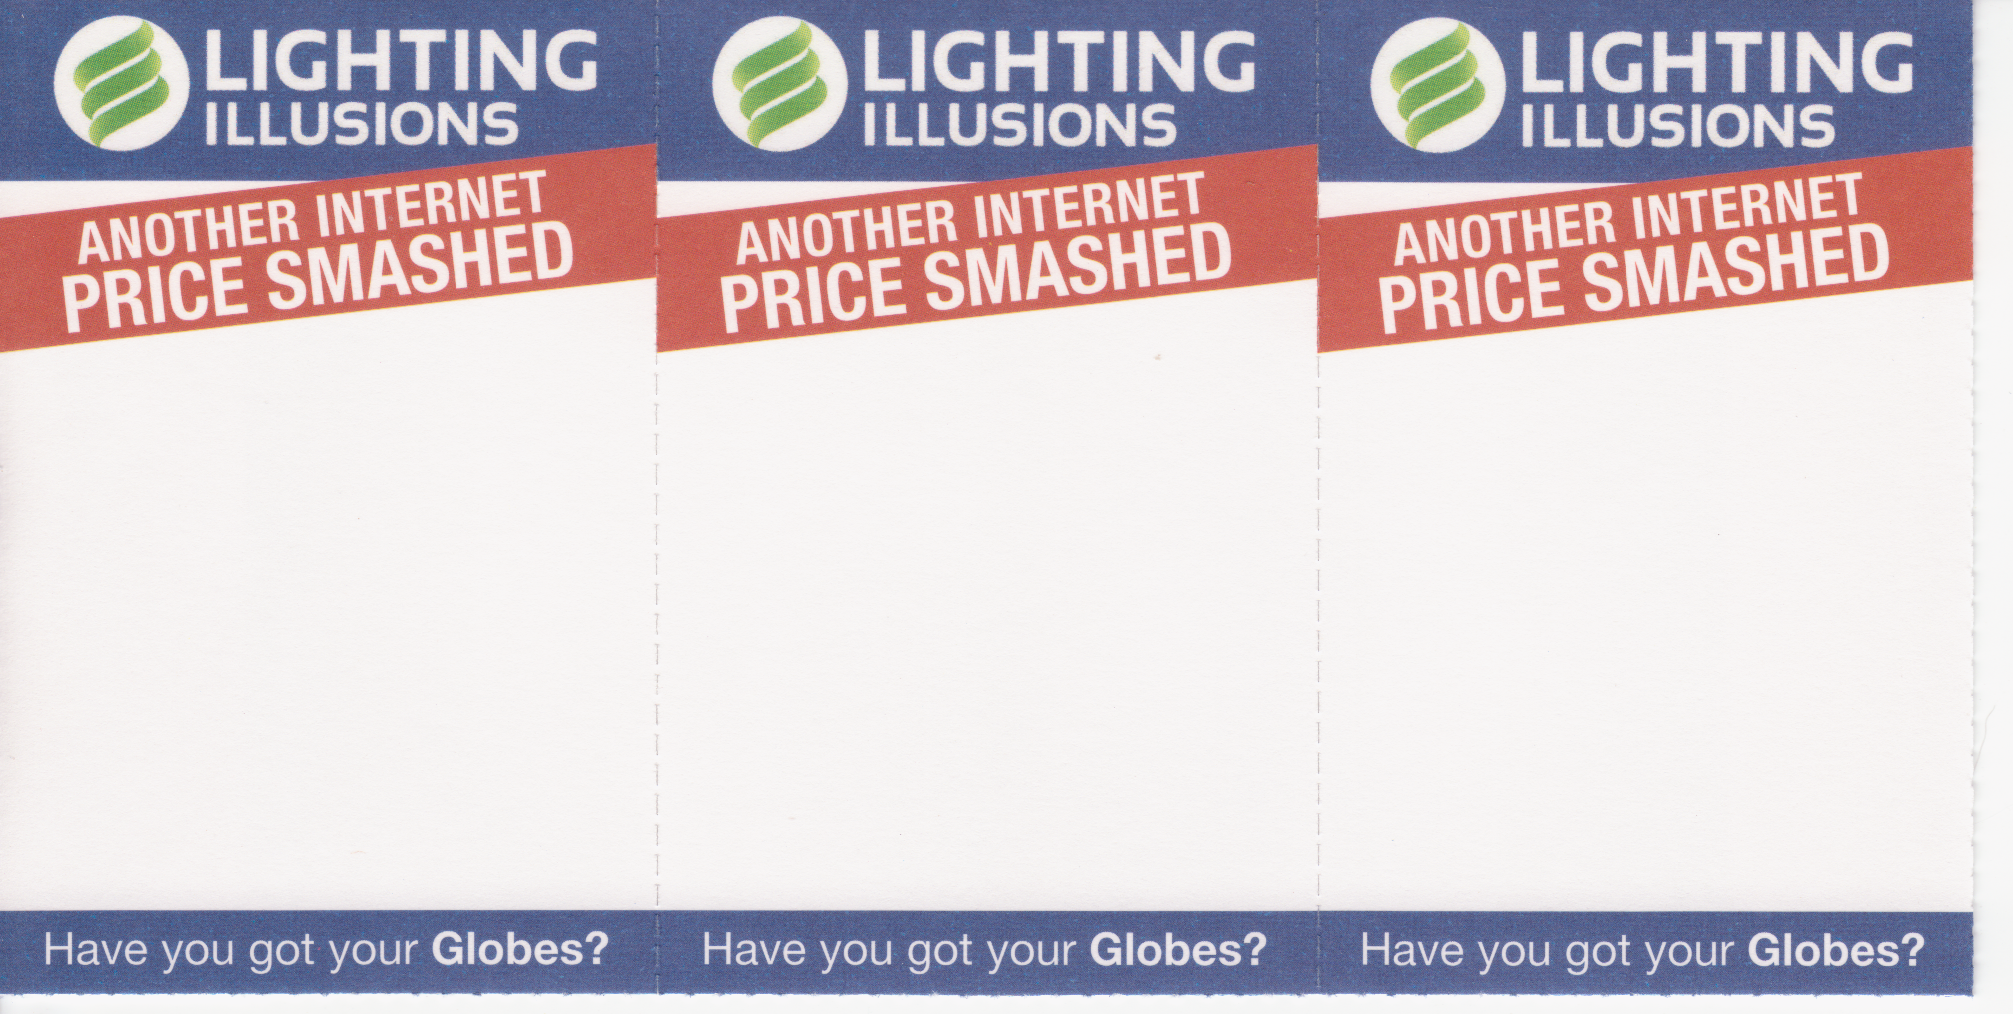 LightingIllusions_another_internet_price_smashed_b